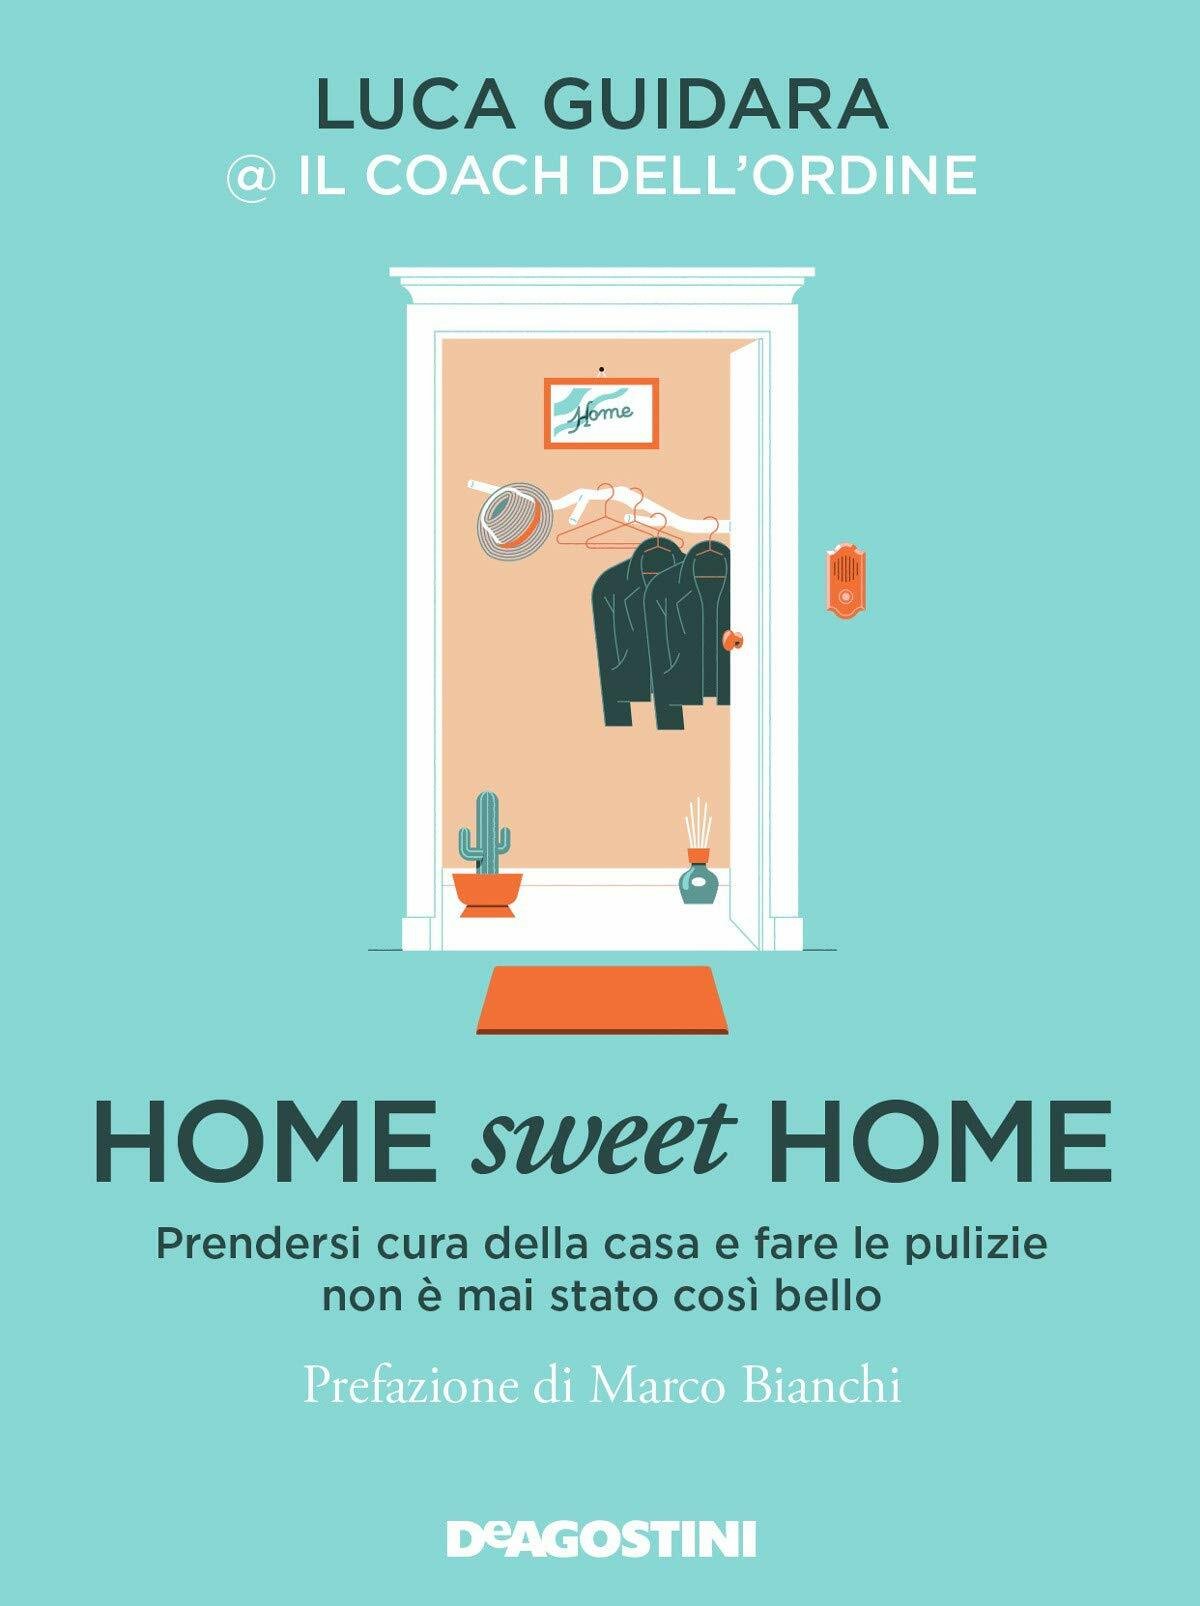 Home sweet home: la copertina